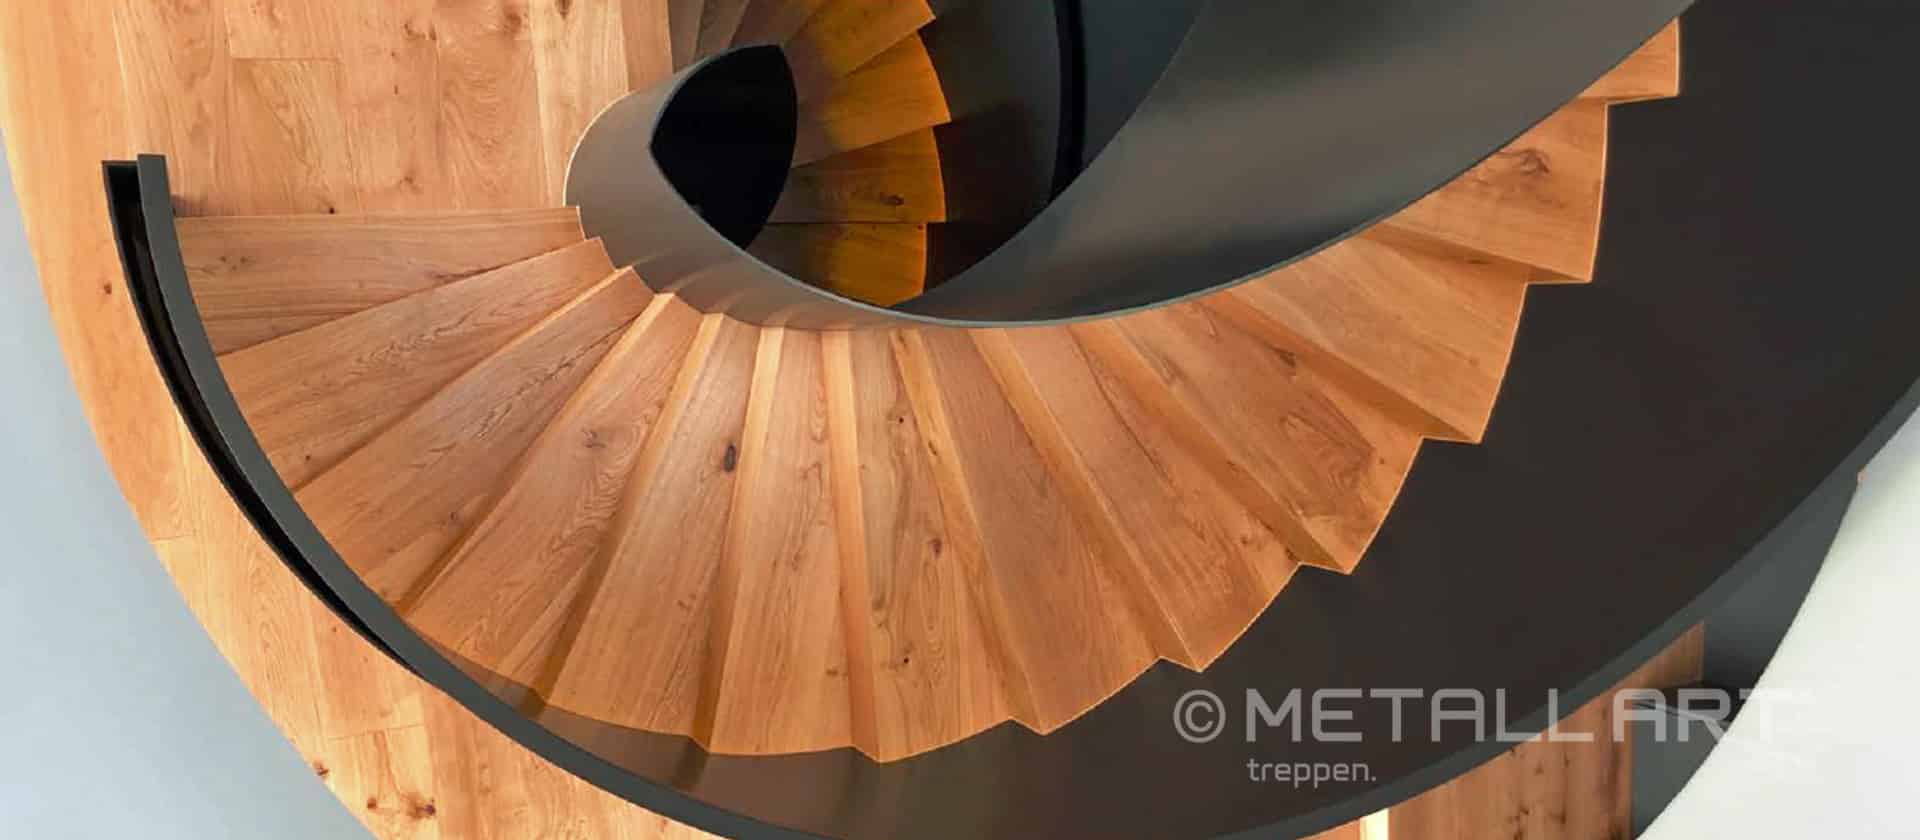 Imponierende Treppe mit skulpturalem Design